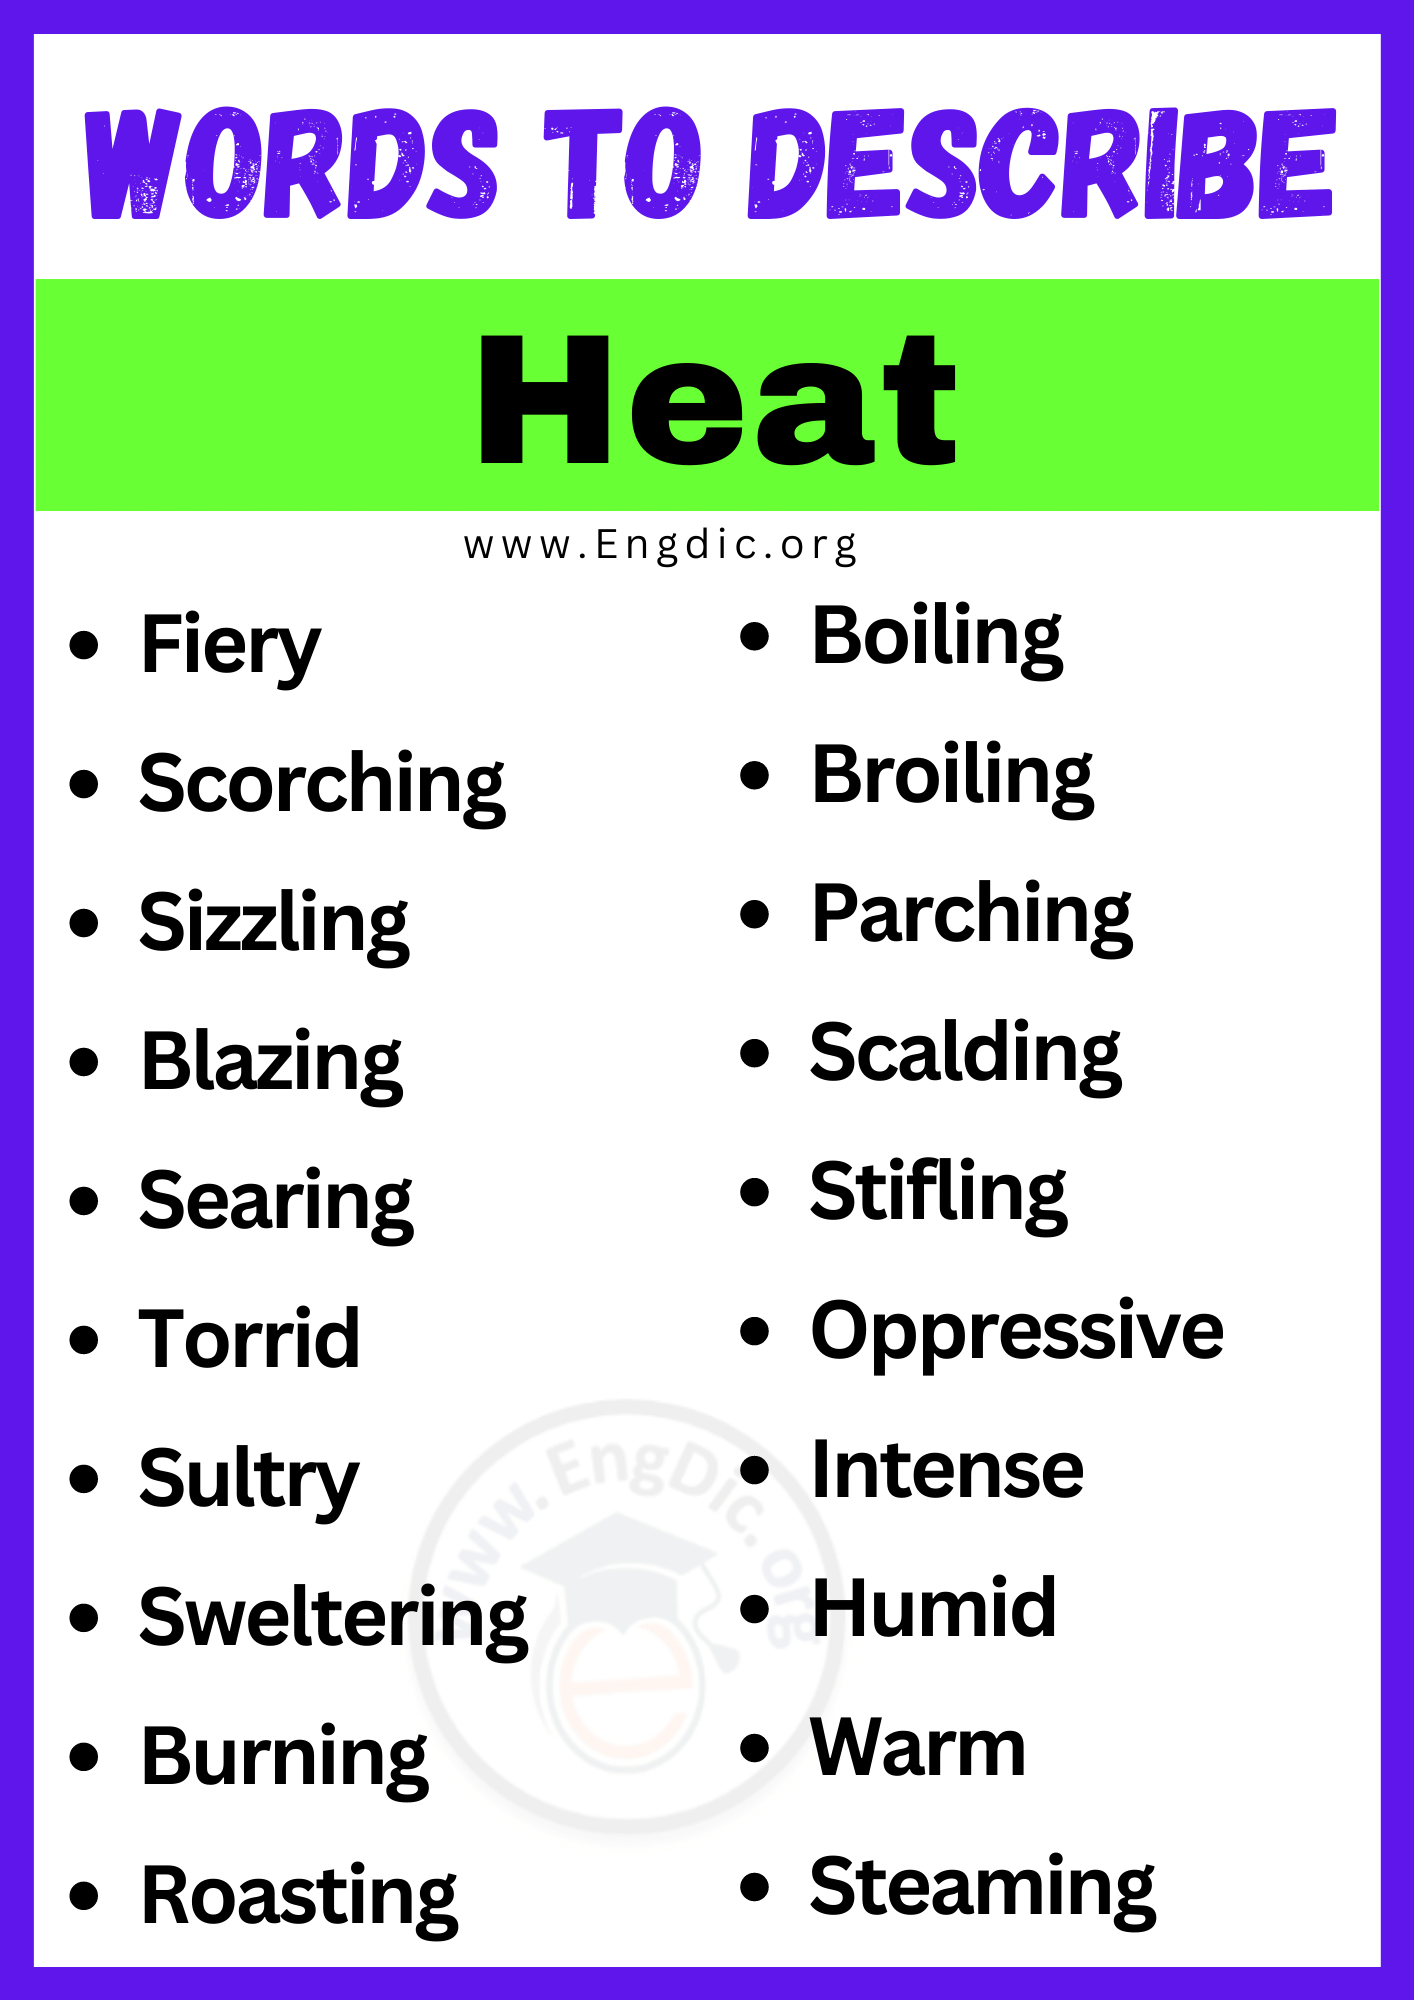 Words to Describe Heat